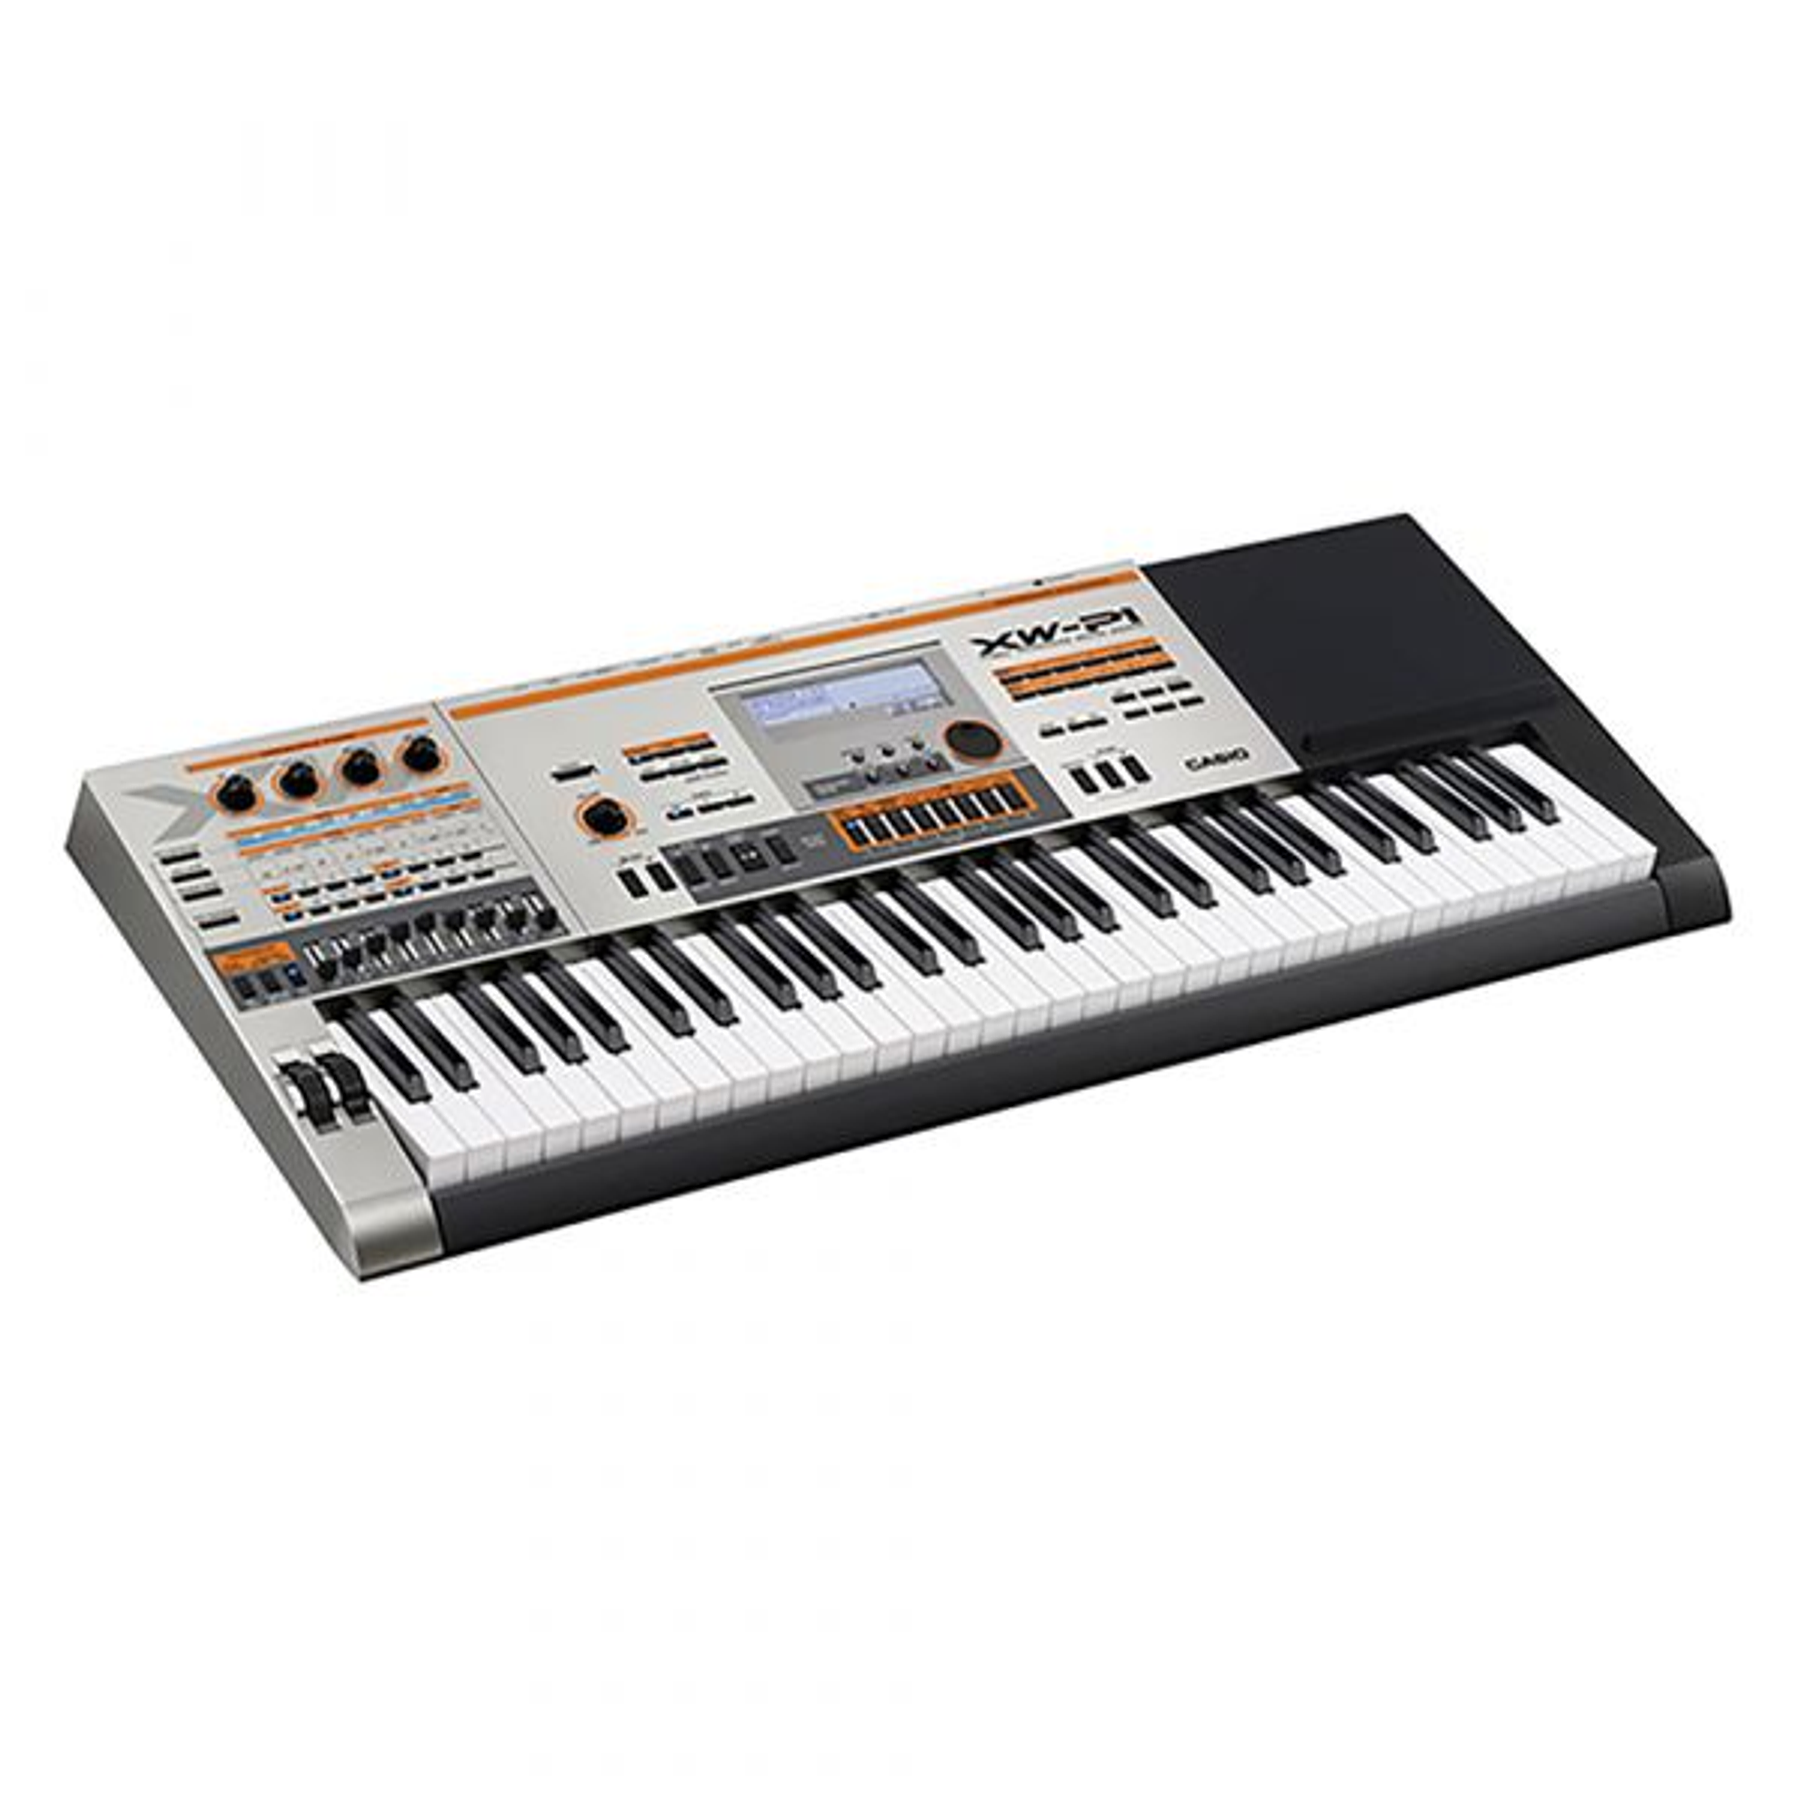 Kit de teclado Yamaha PSR-E273 con atril estuche y pedal de sustain